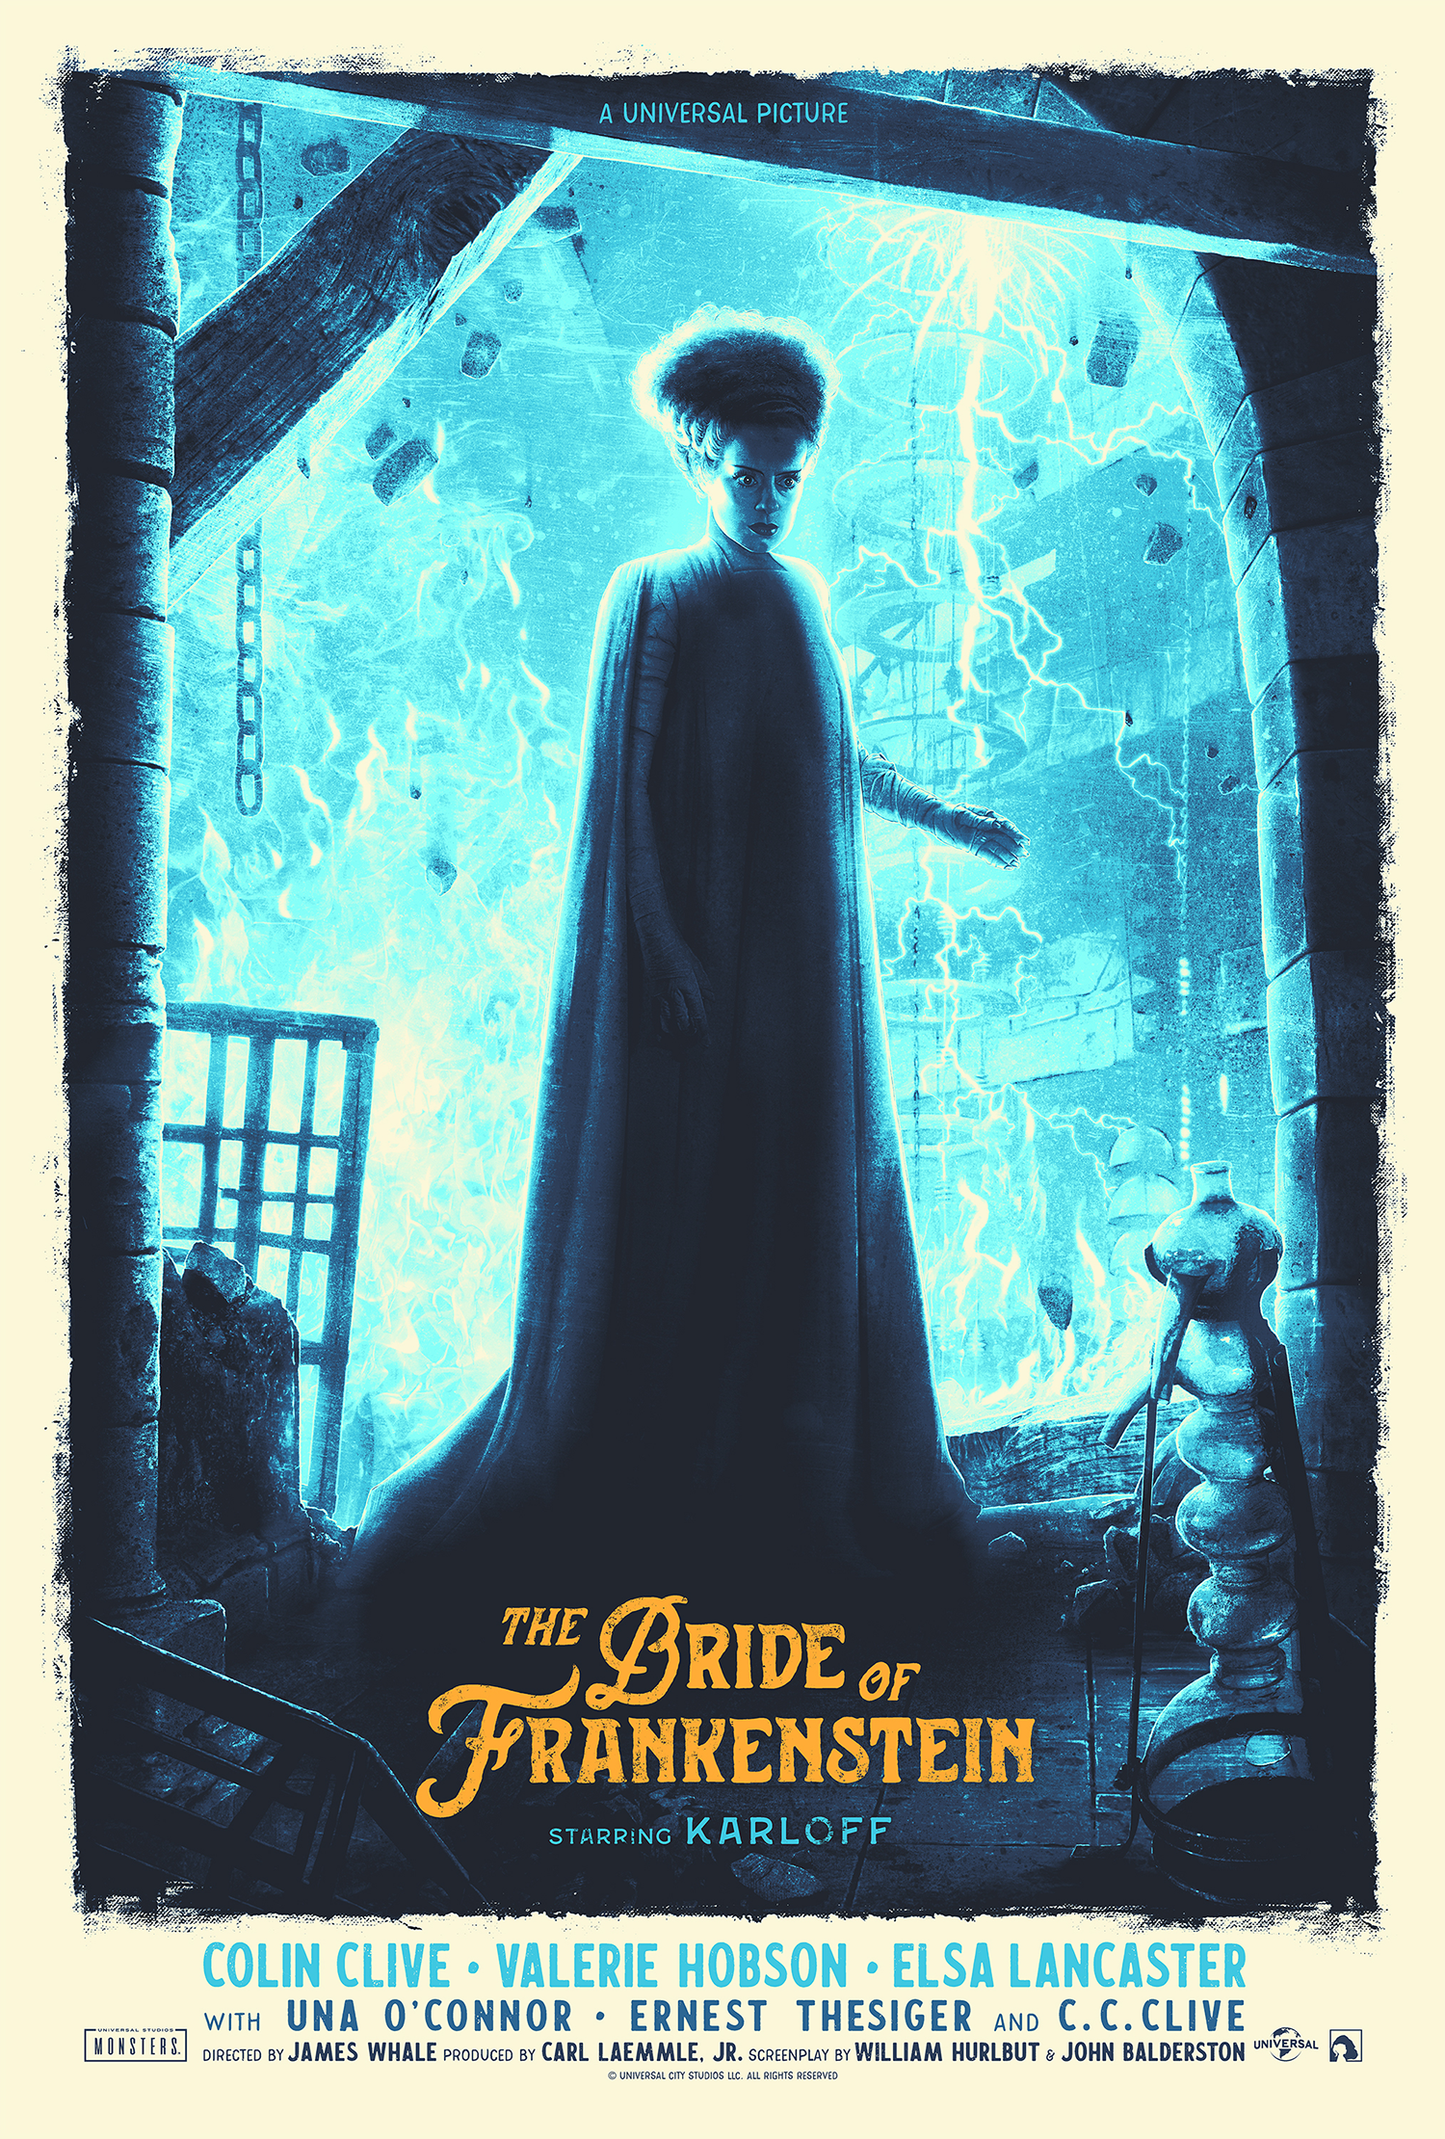 Kevin Wilson "The Bride of Frankenstein"